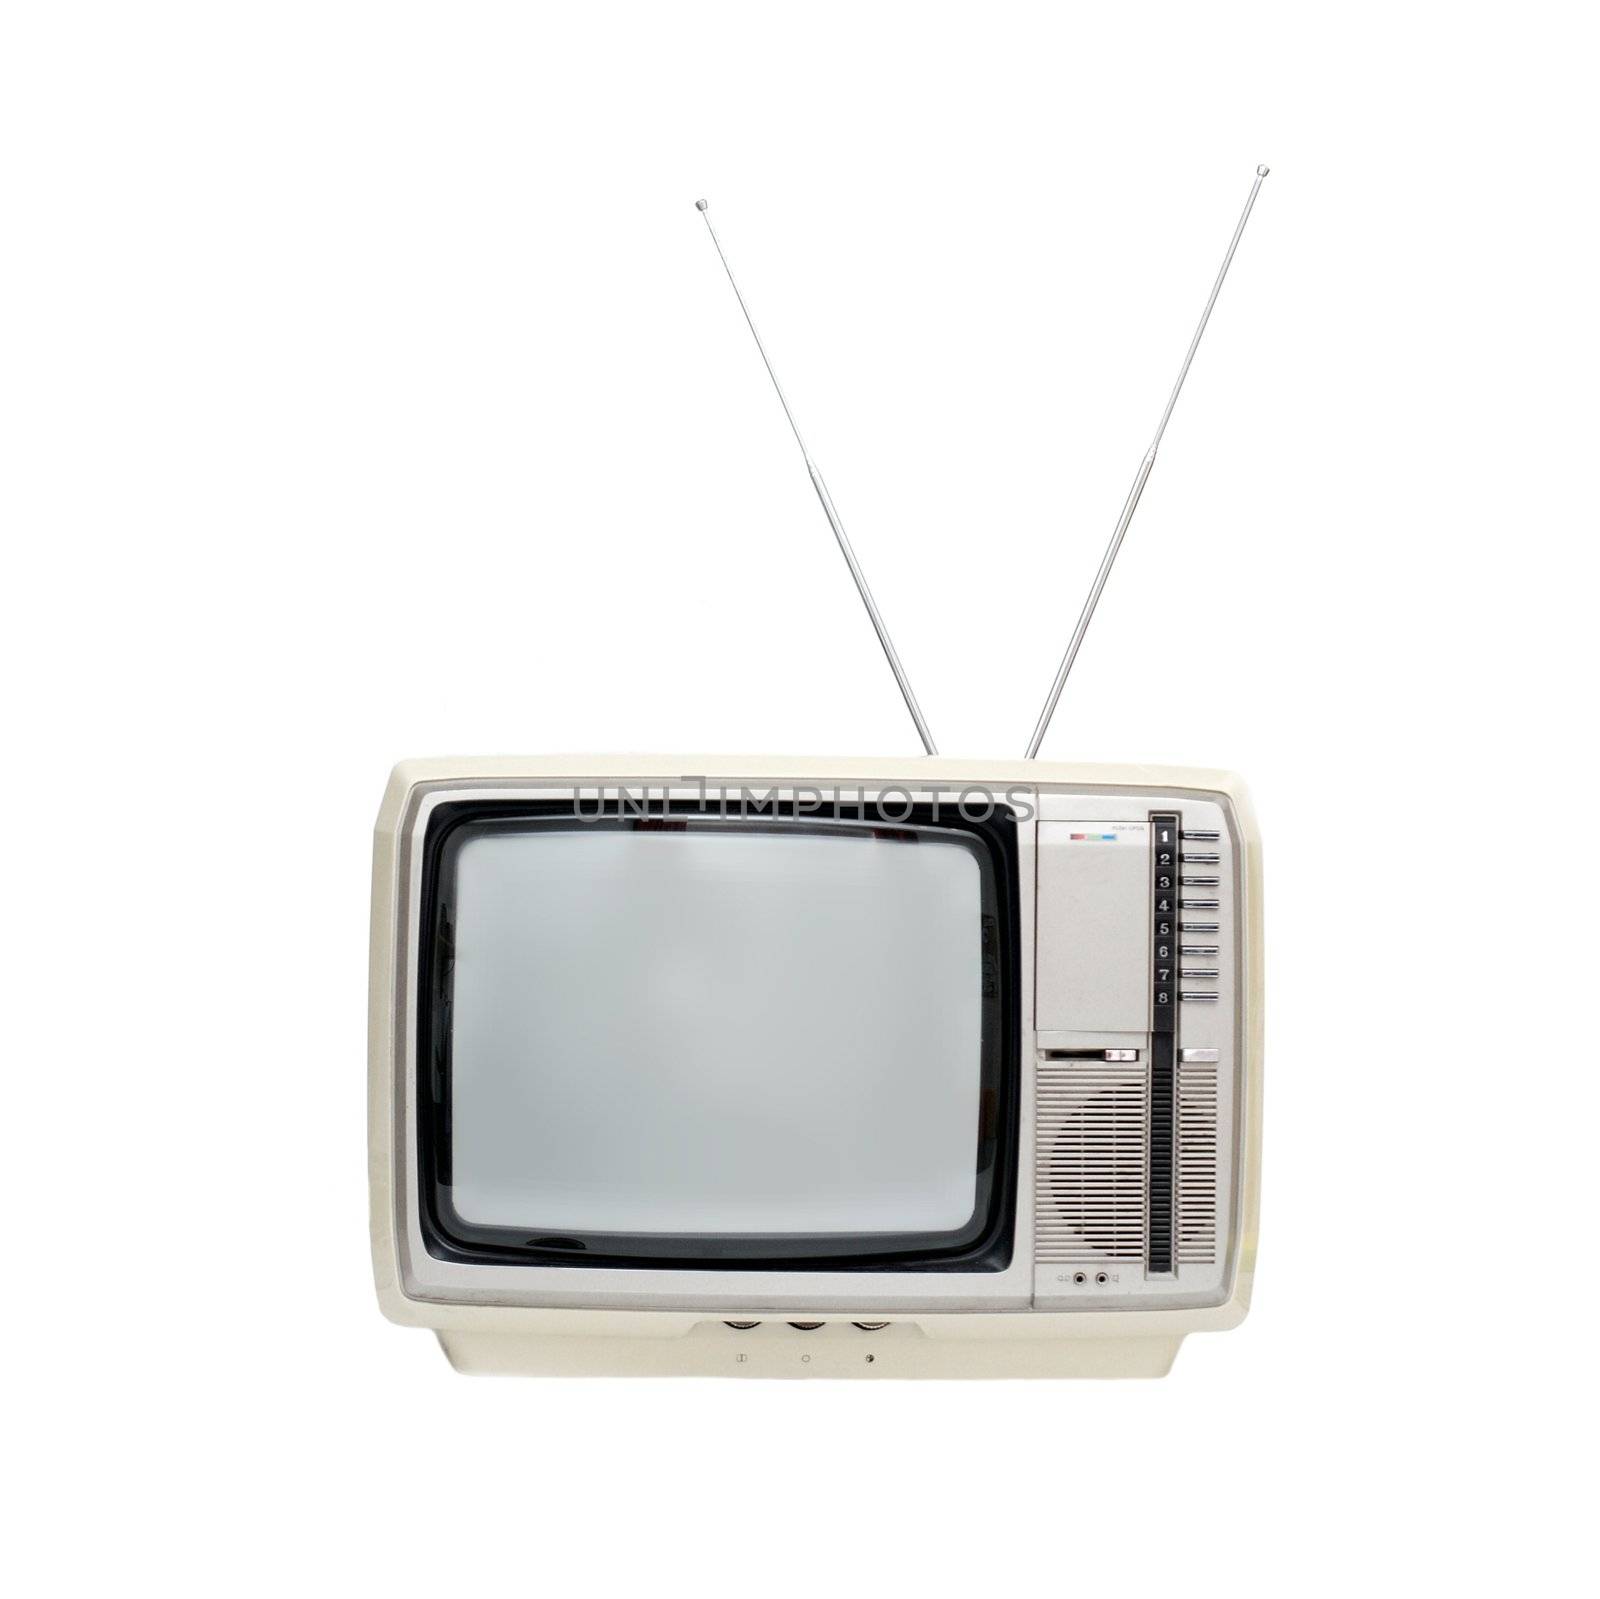 TV by Gudella